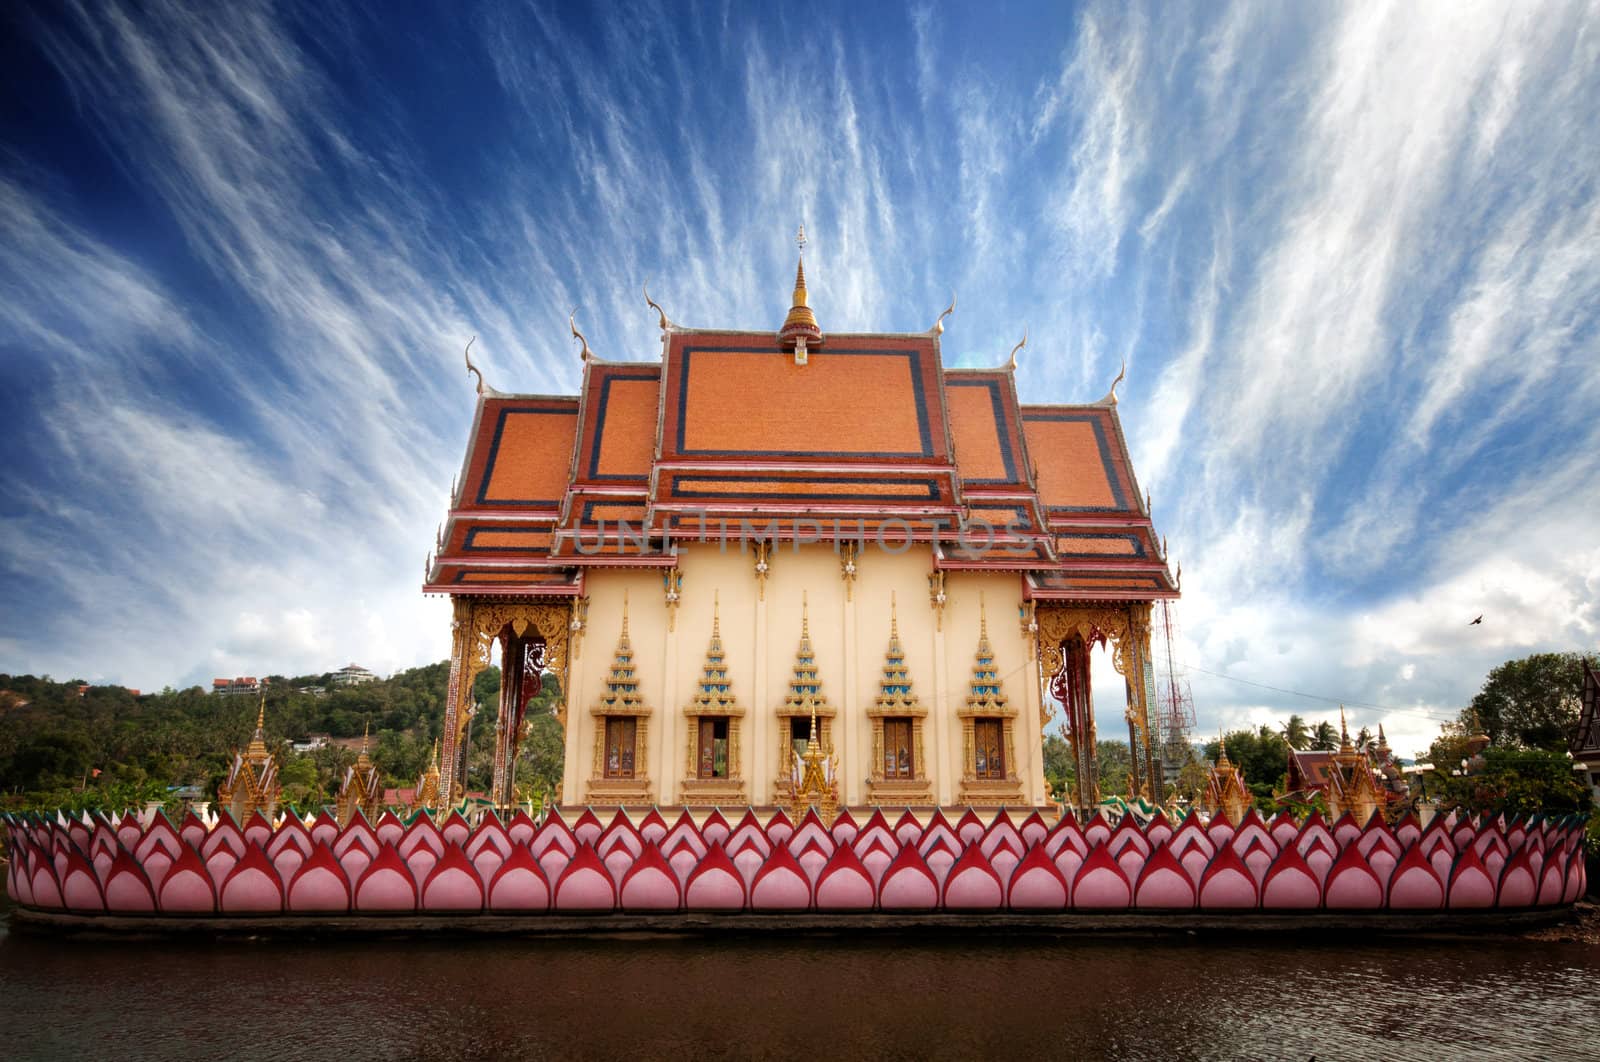 Buddhist temple at Ko Samui island, Thailand by johnnychaos